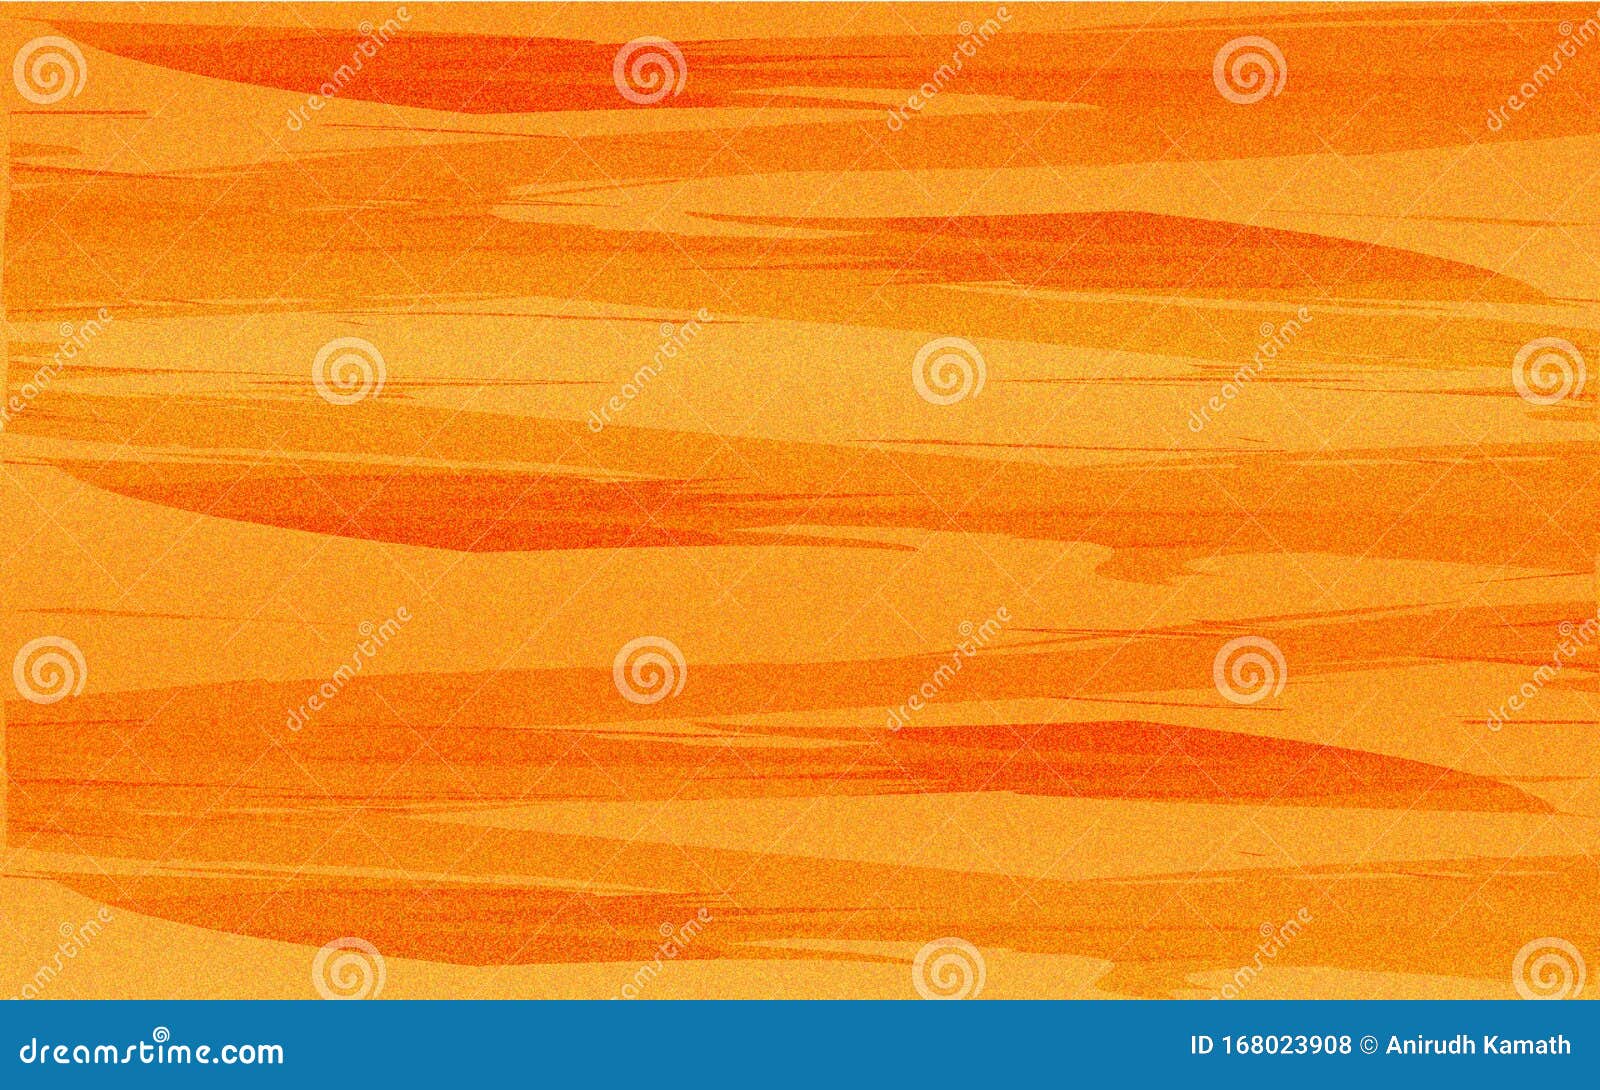 saffron brushstroke background